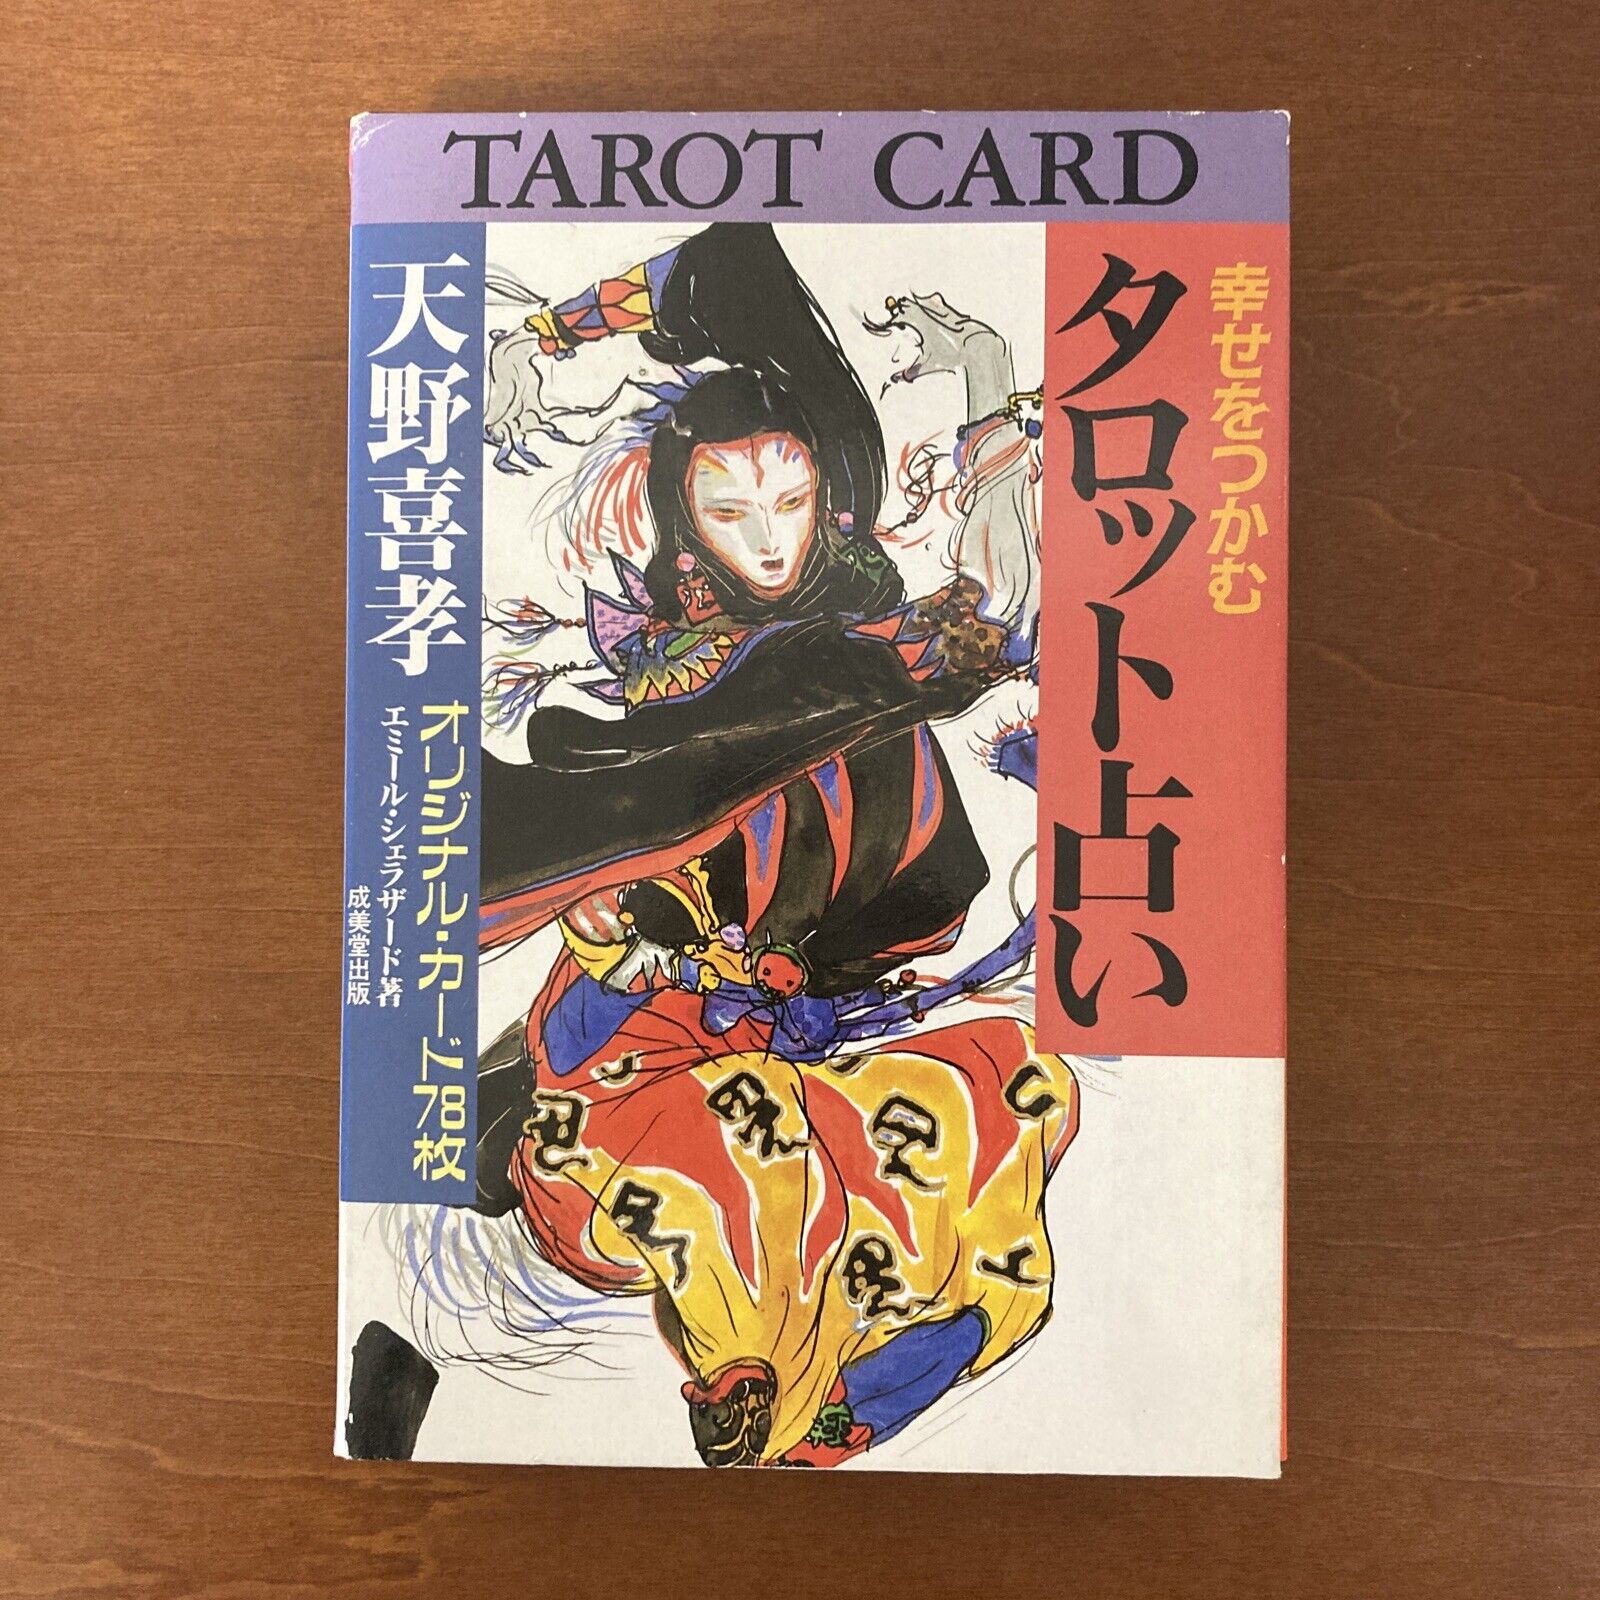 Yoshitaka Amano Tarot Deck 78 Cards and Art Book set Illustration